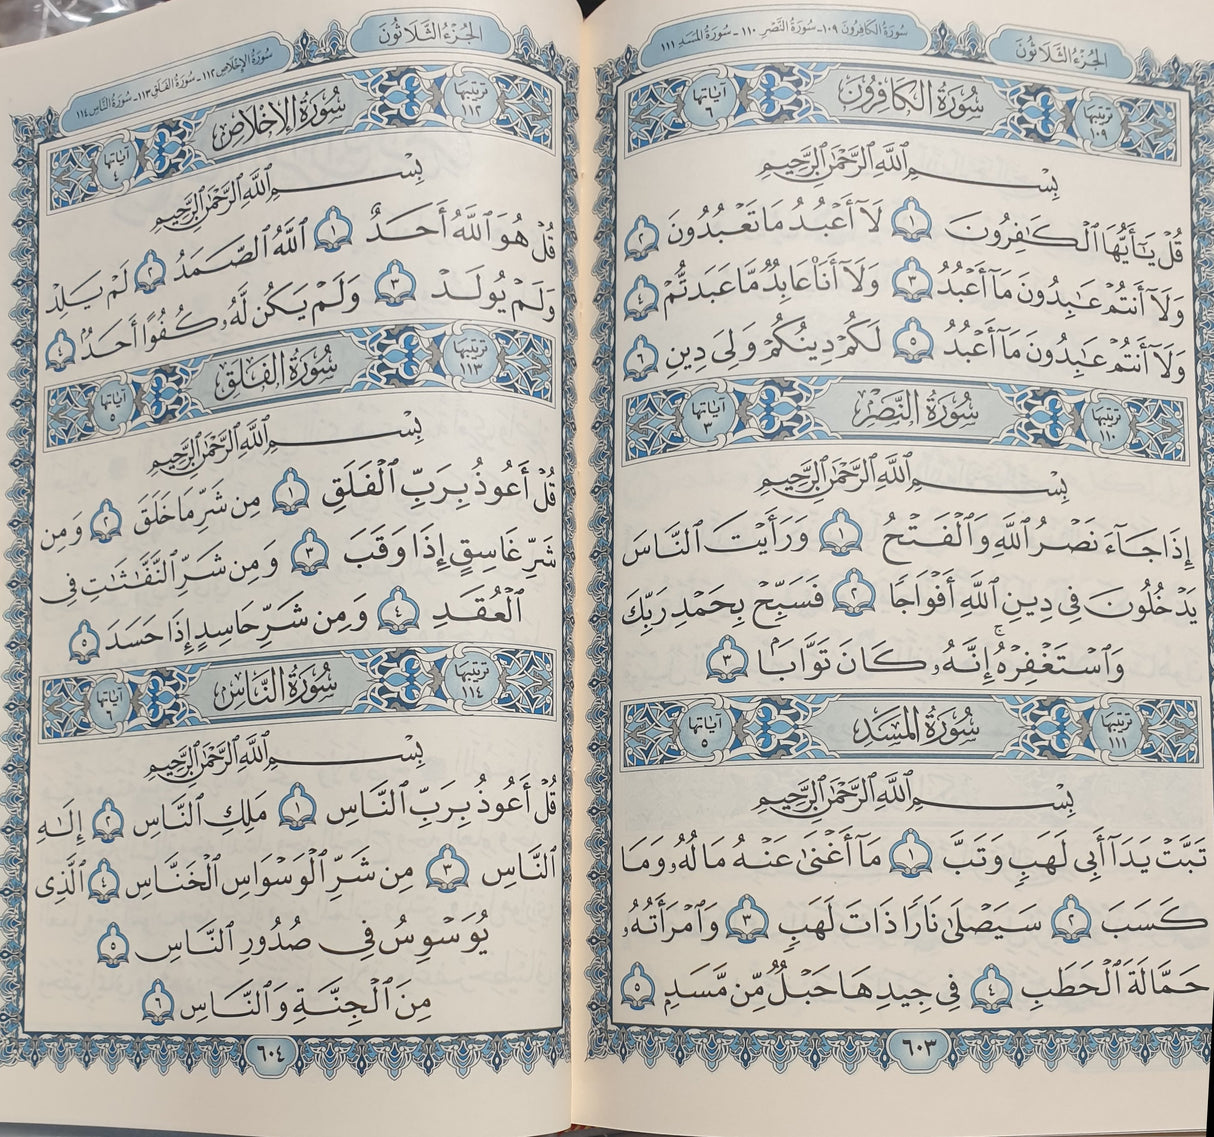 Quran 14.5x20.5cm A5, Silver - Cream pages, Arabic Text Uthmani Script Cover Design